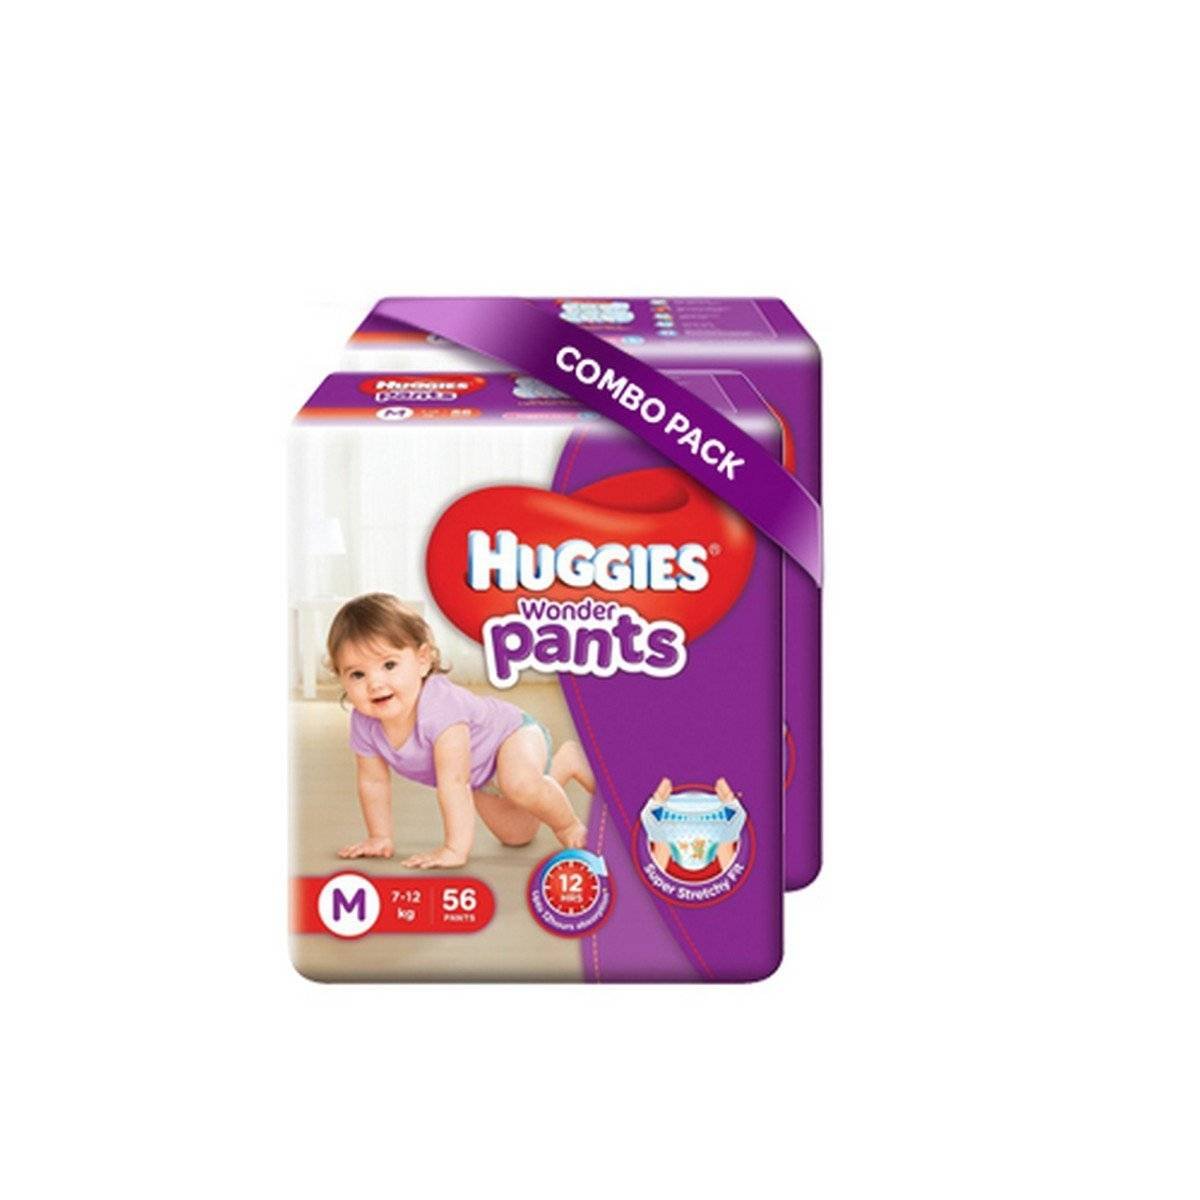 Huggies Wonder Pants Medium Size Diapers (Pack of 2)